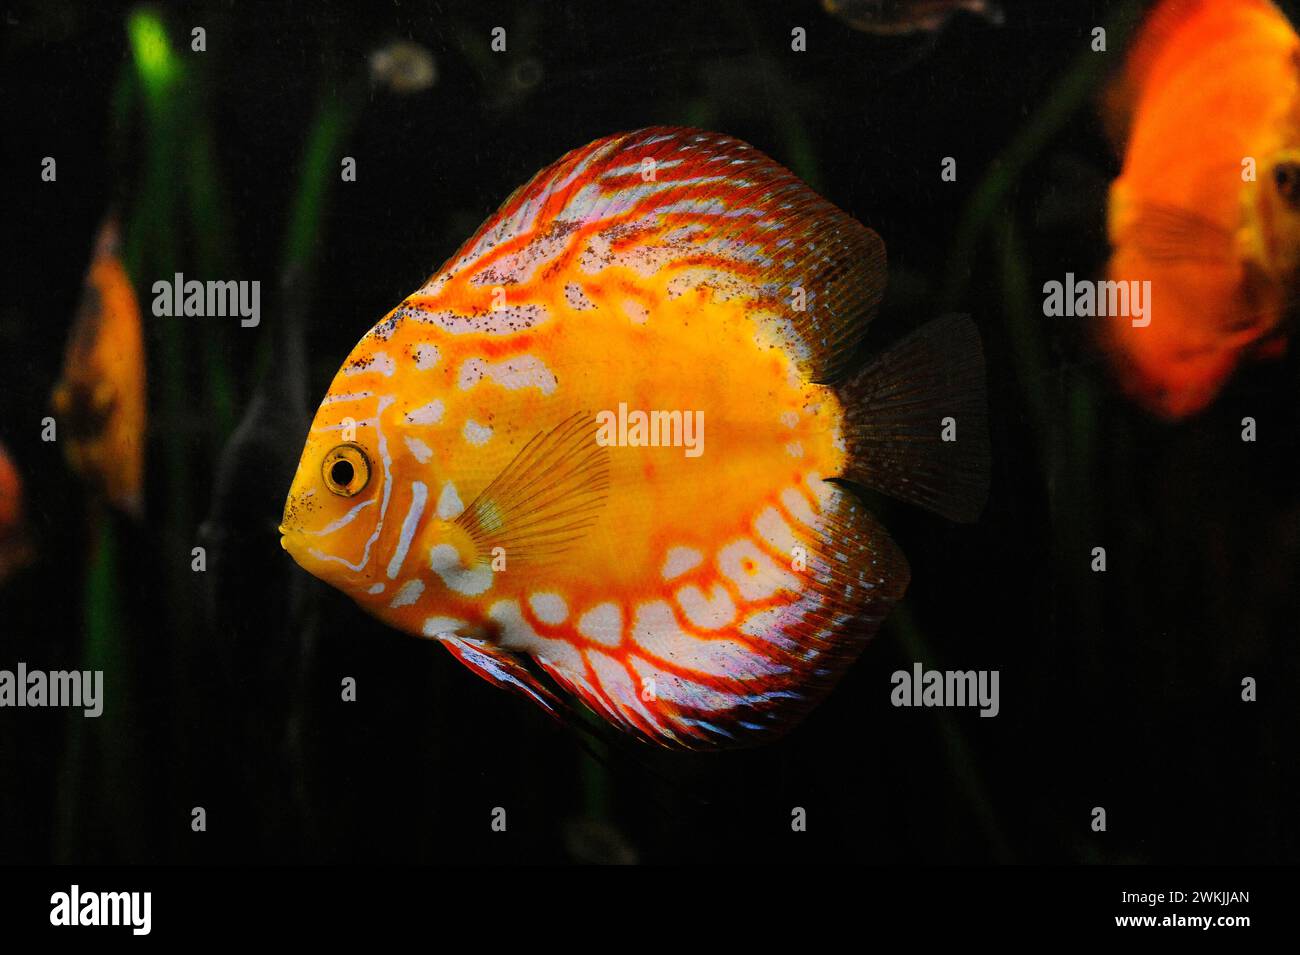 Discus (Symphysodon aequifasciatus axelrodi) is a fresh water fish native to Amazon basin. Stock Photo